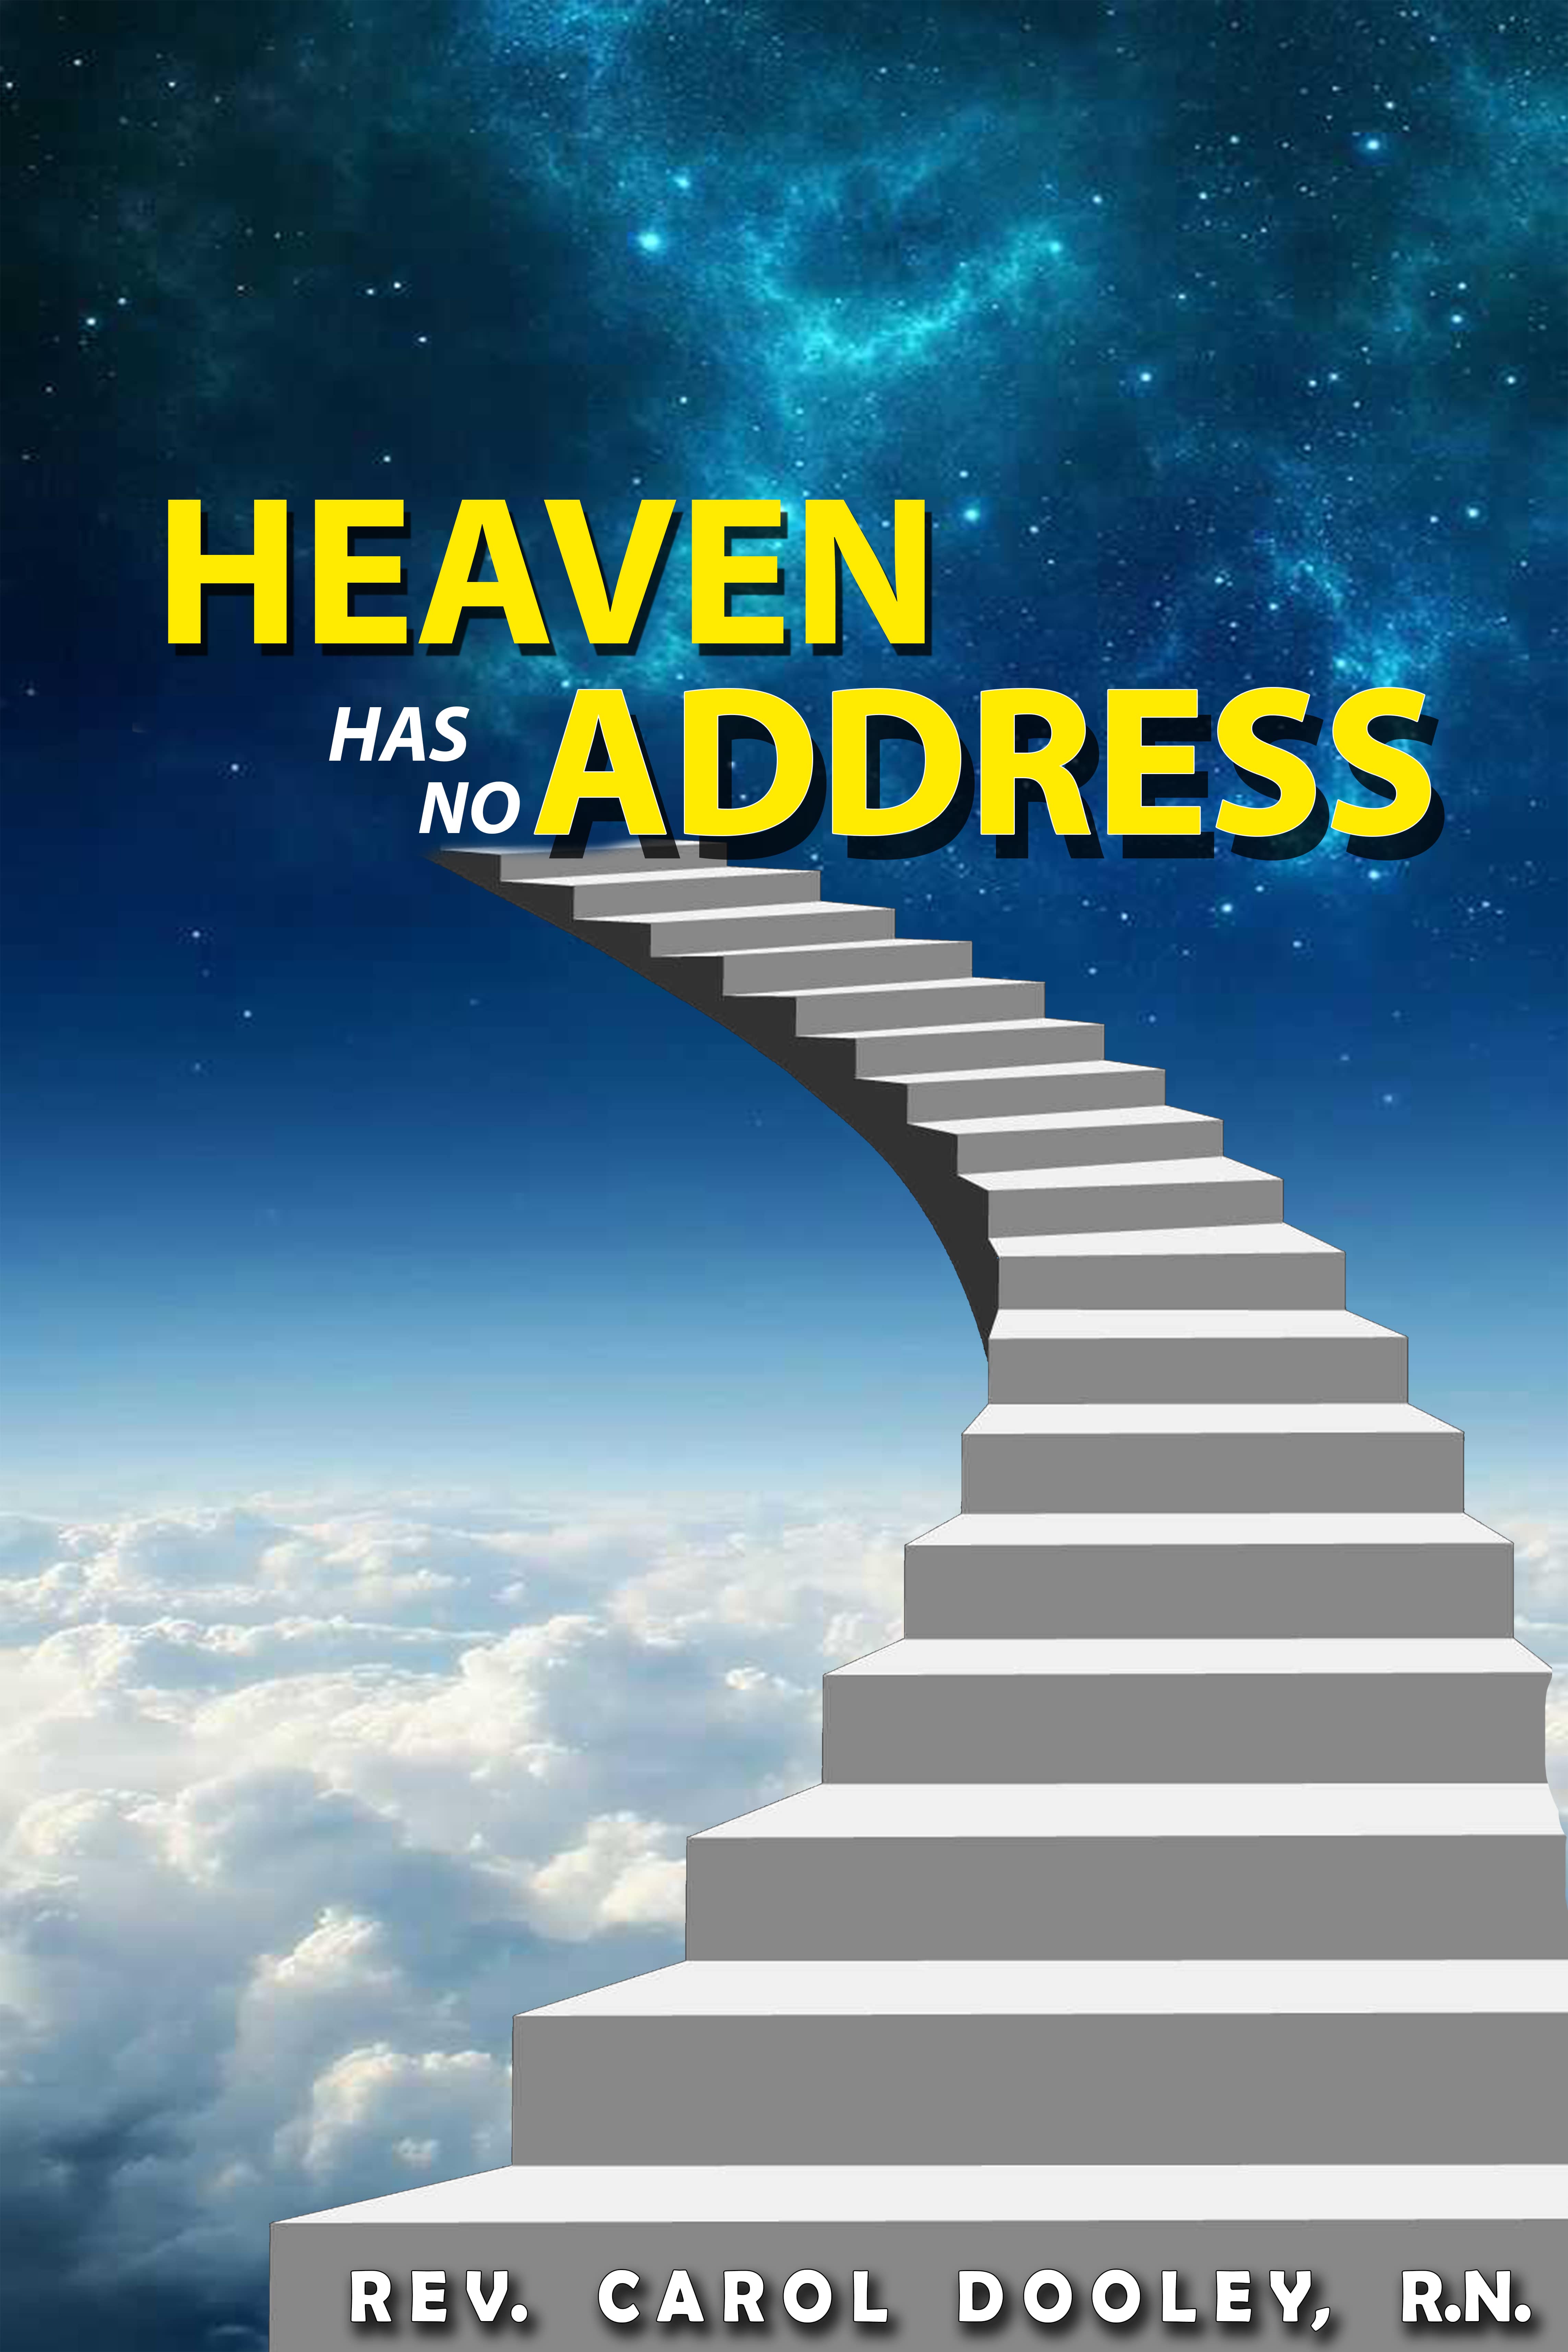 HEAVEN HAS NO ADDRESS